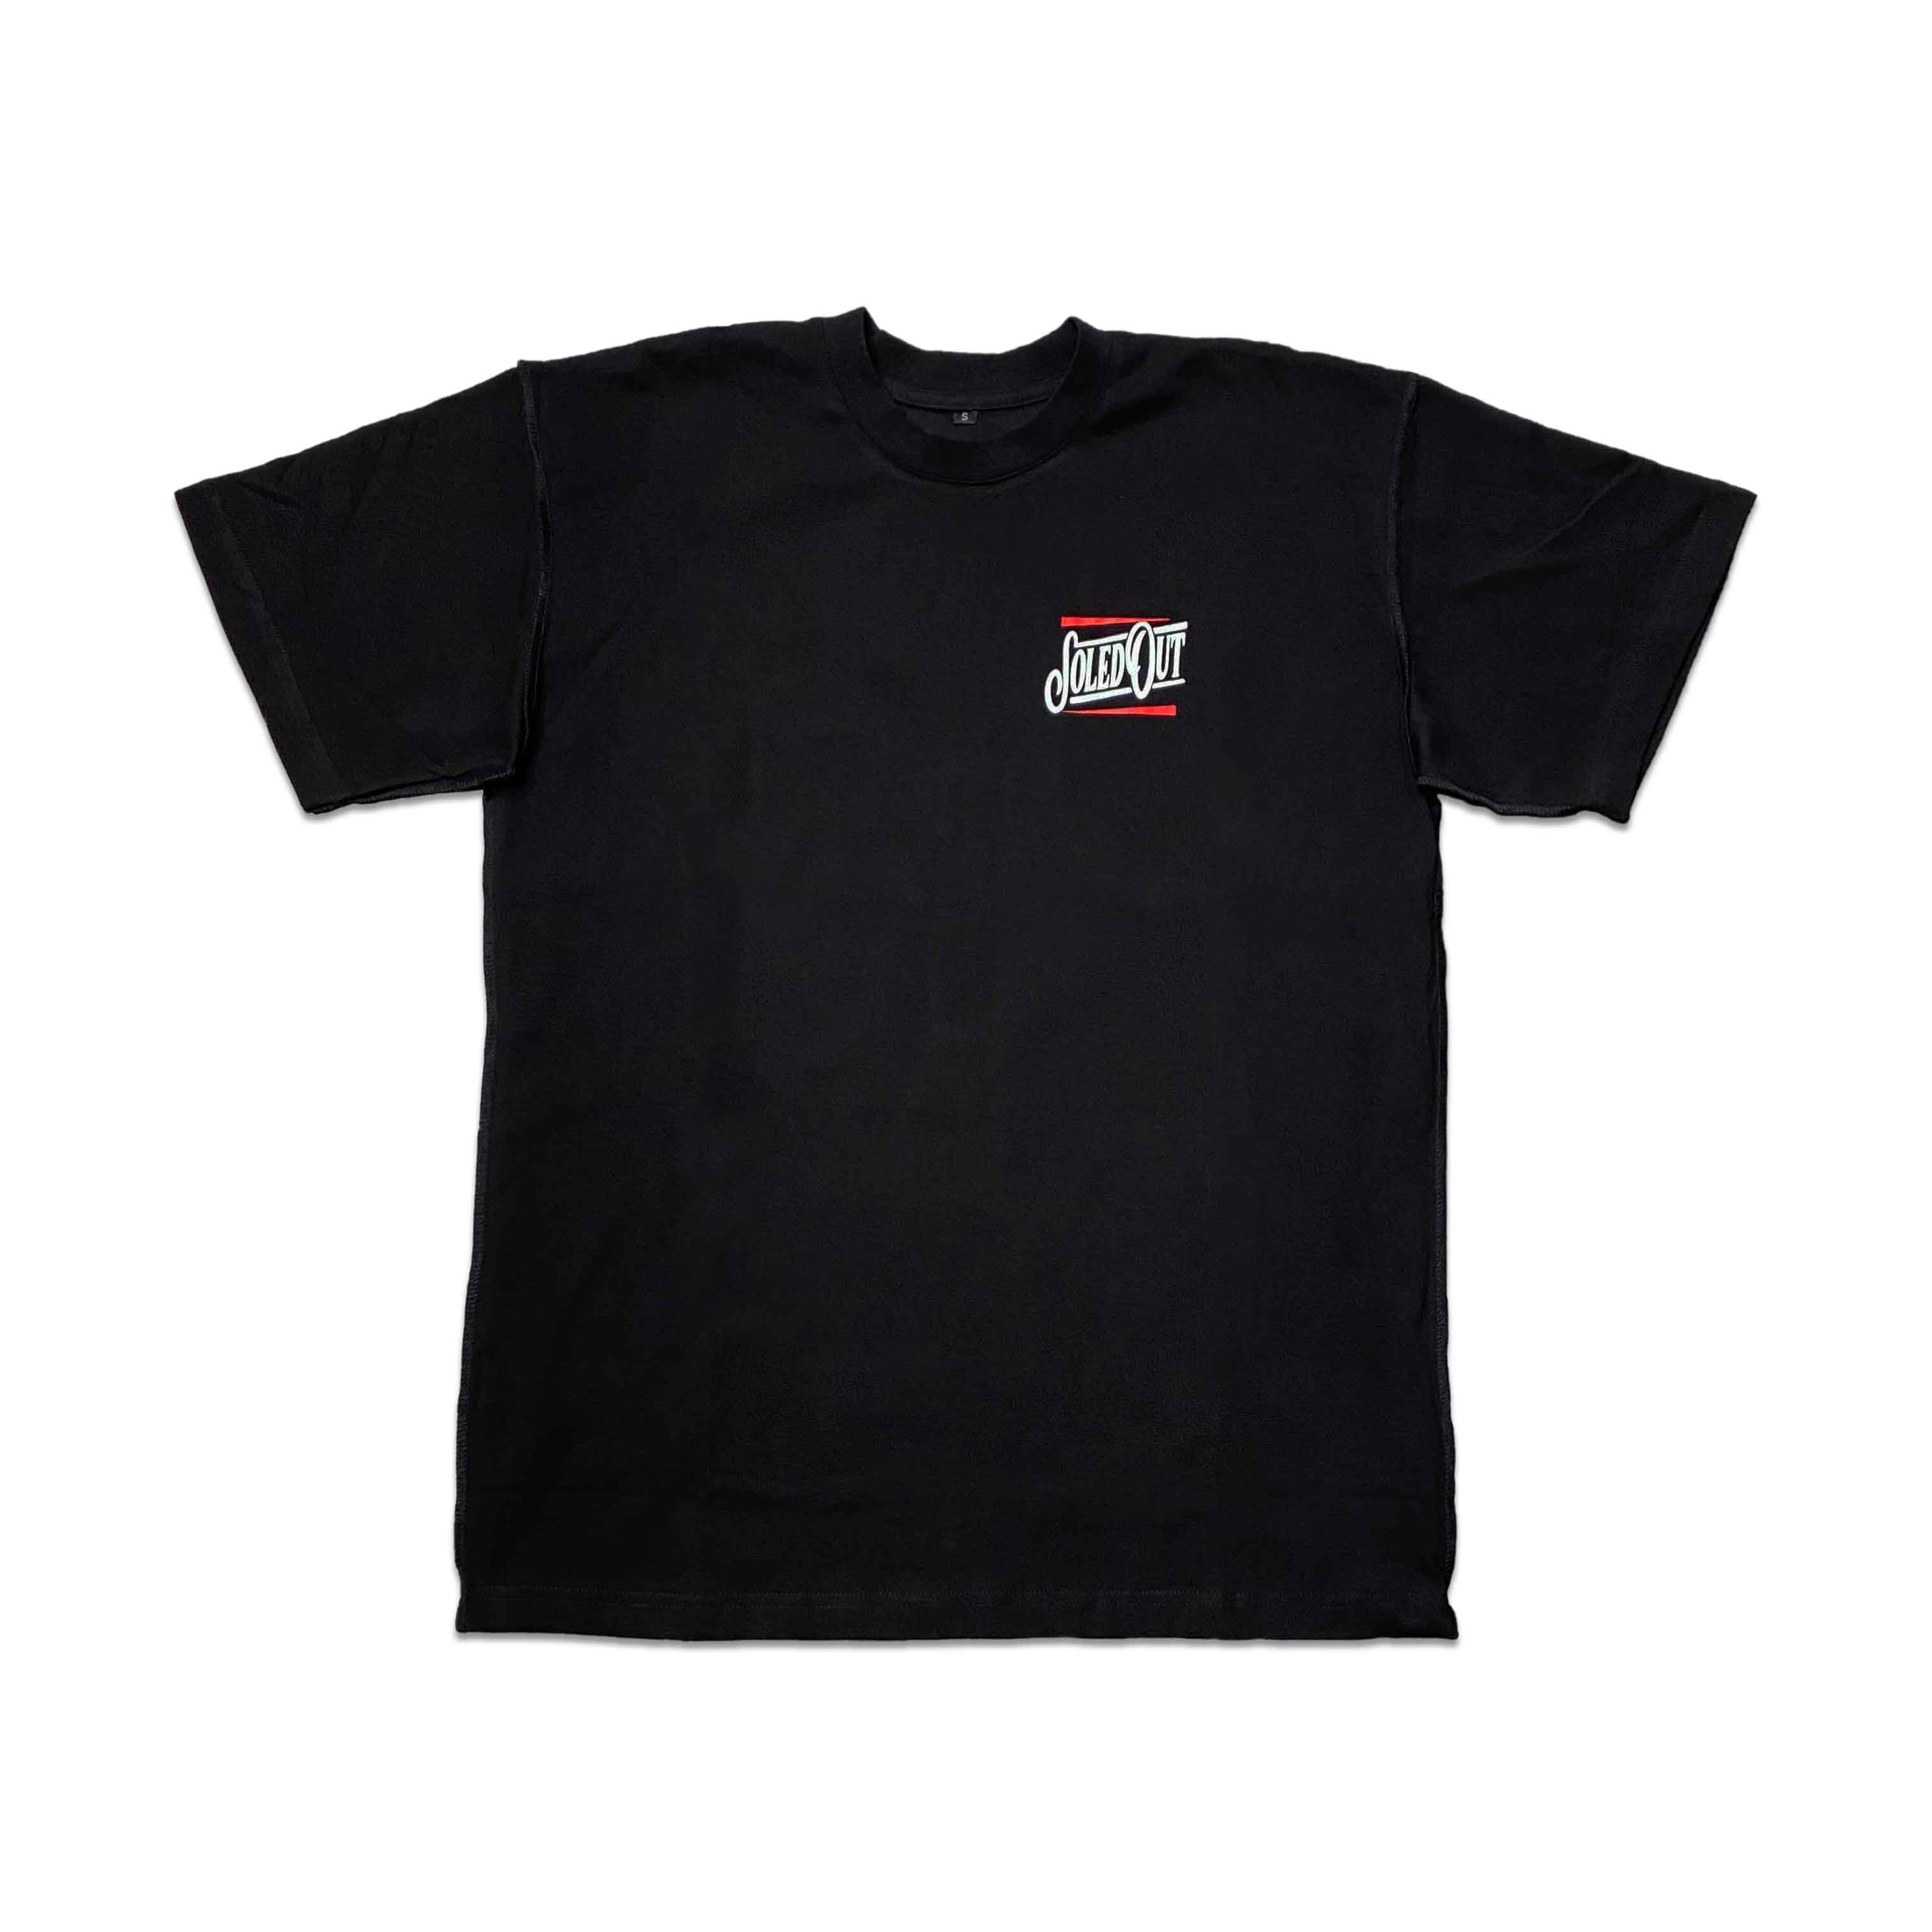 Soled Out T-Shirt &quot;ADVERTISEMENT&quot; Black New Size S